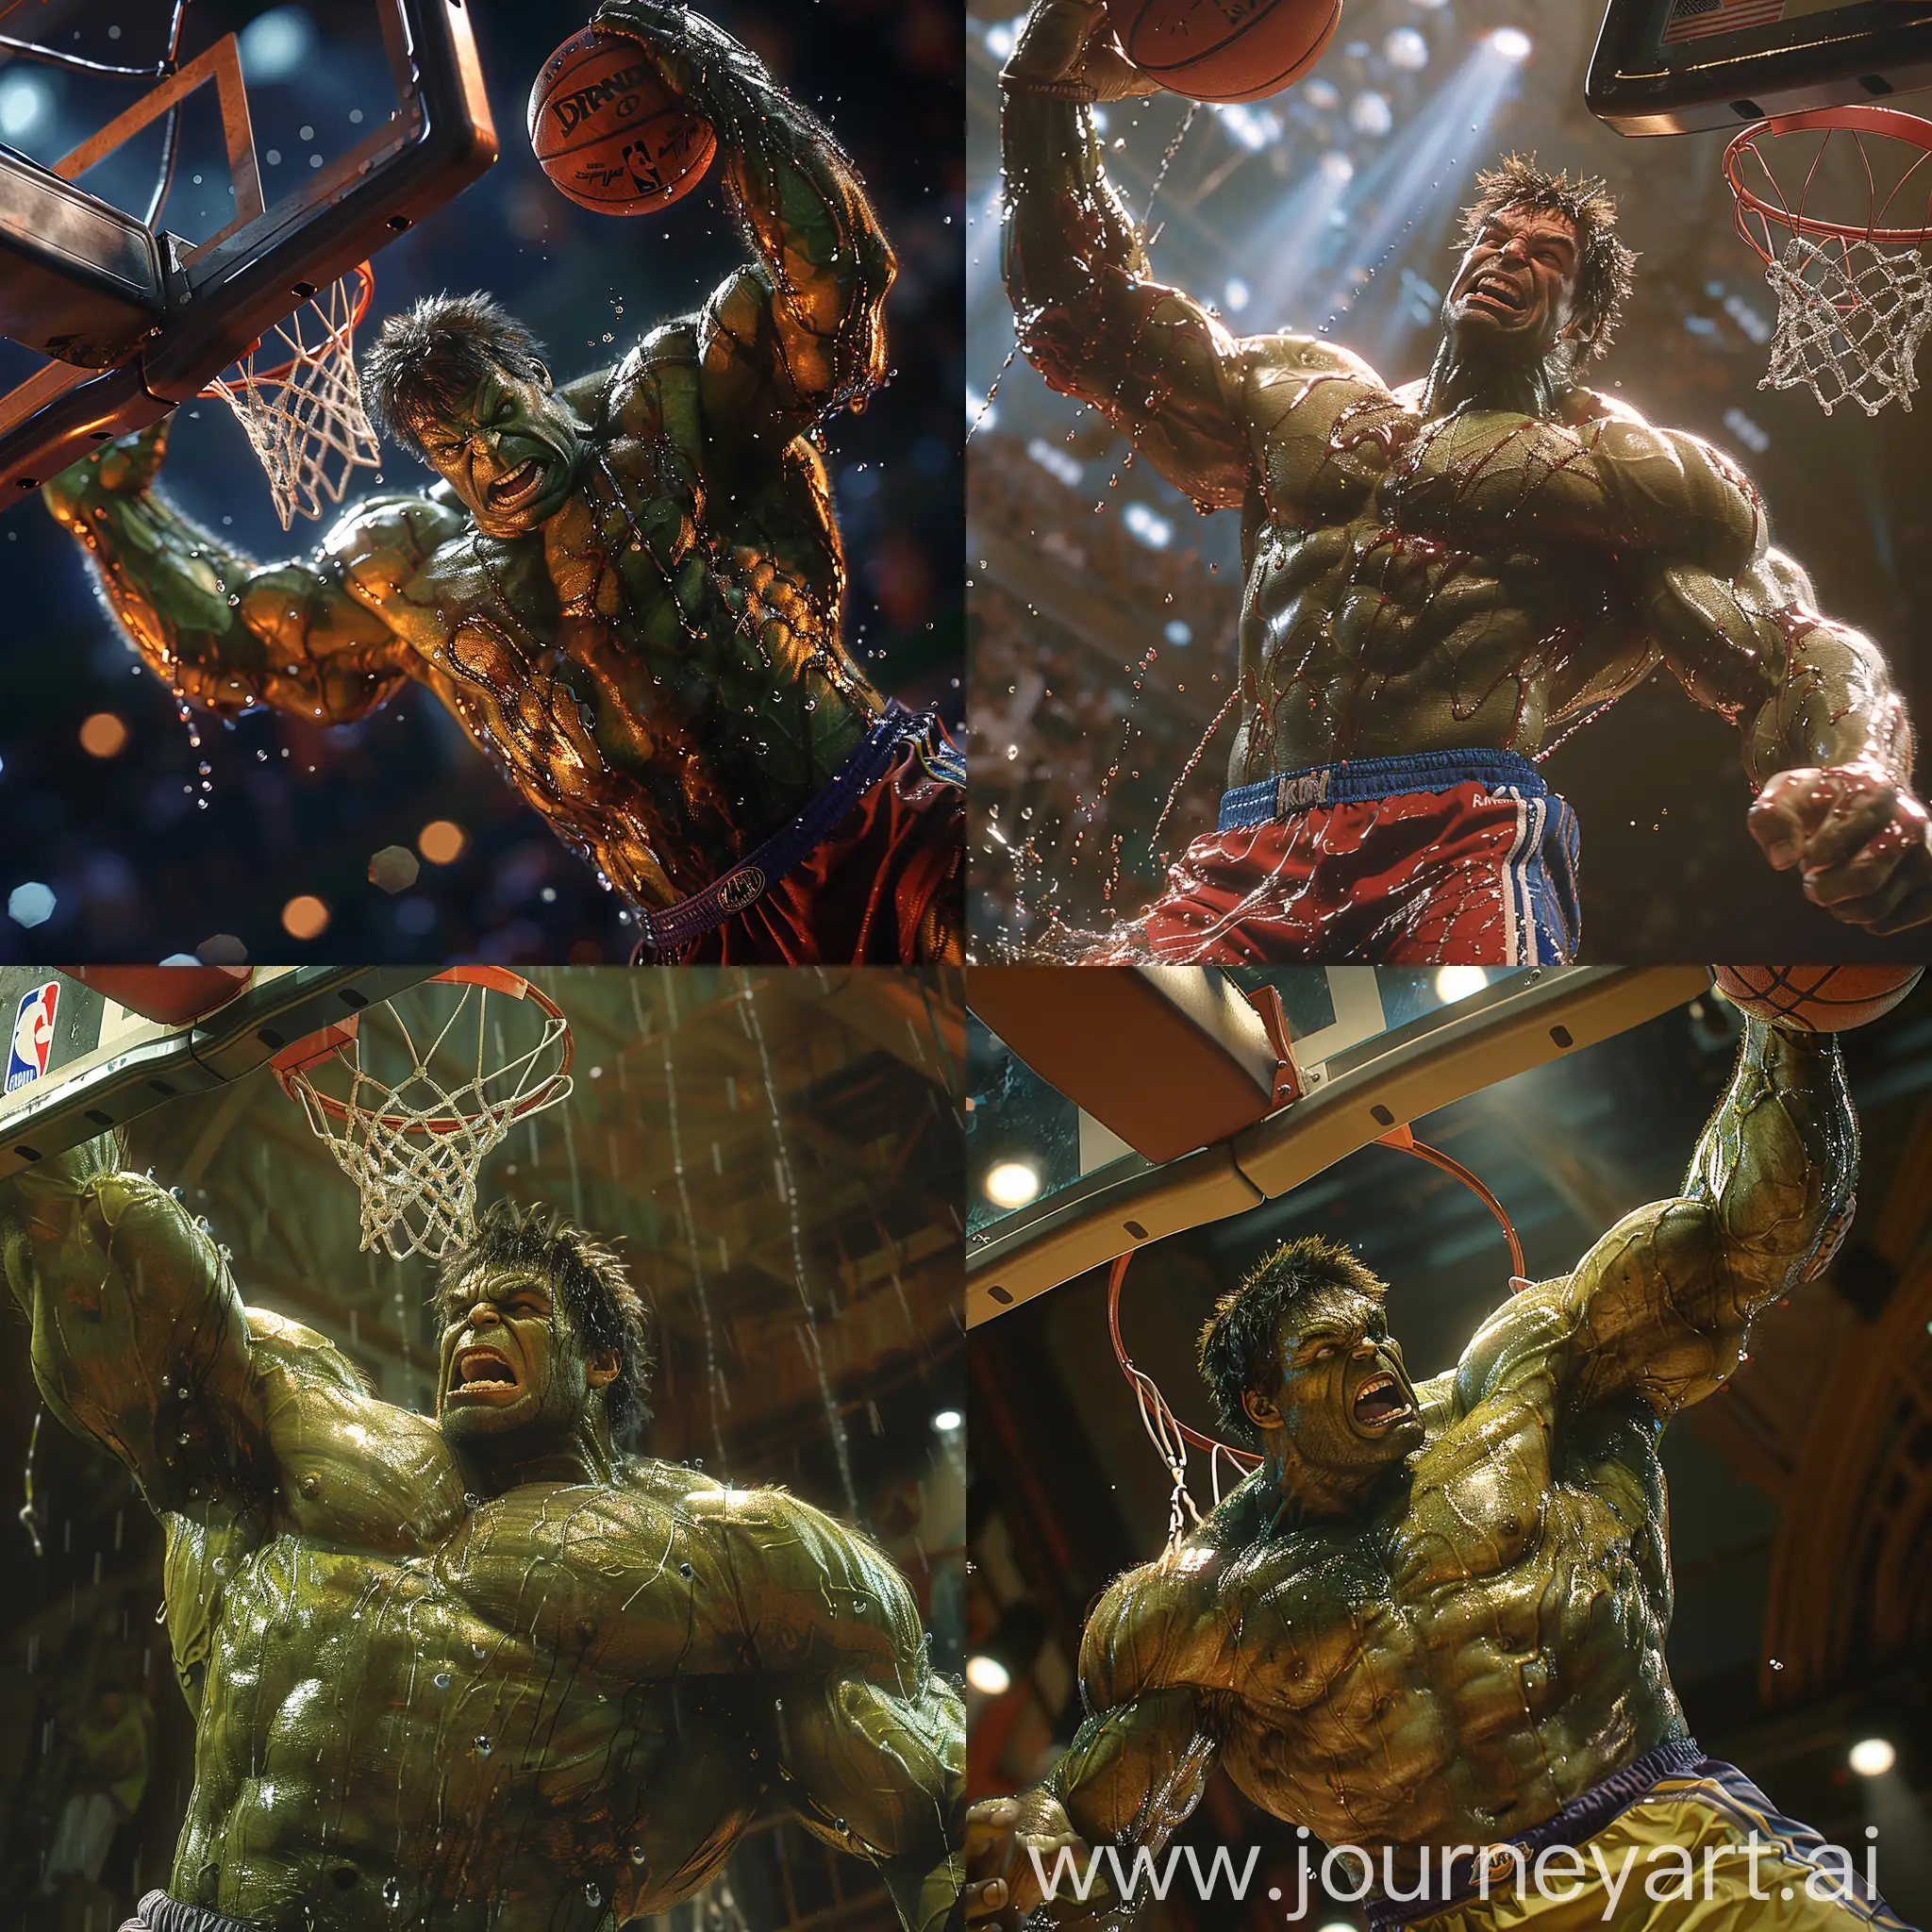 Marvels-Hulk-Dunking-Basketball-in-Lakers-Uniform